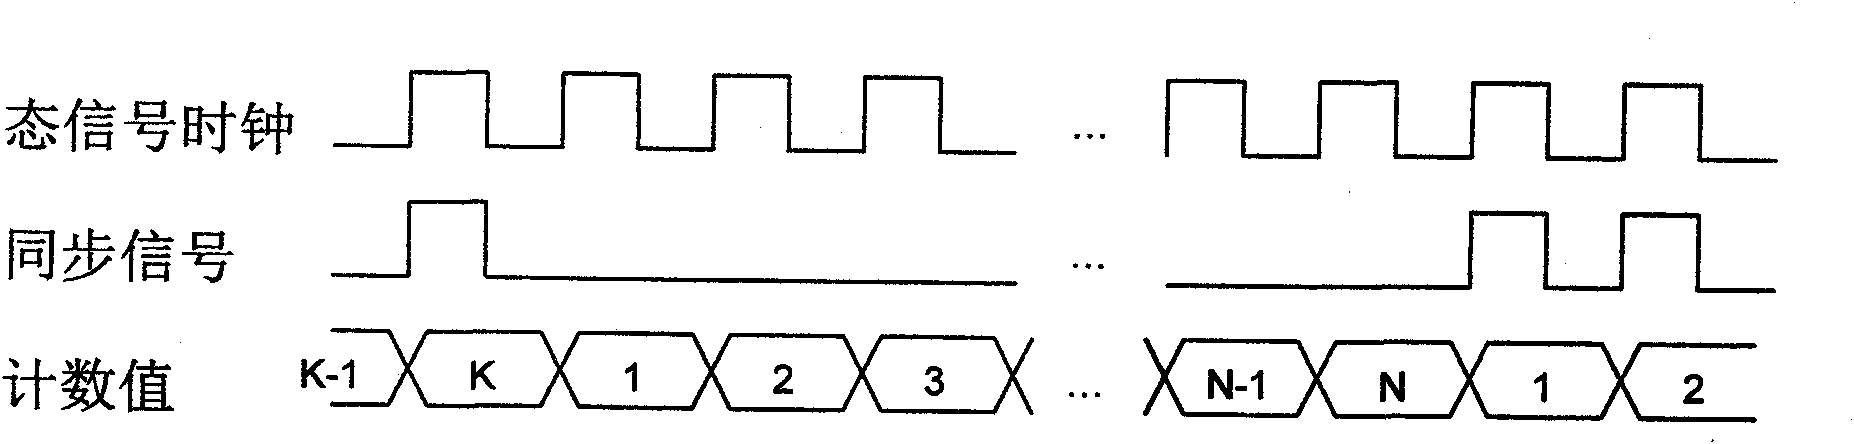 Synchronizer and synchronization method for quantum key distribution